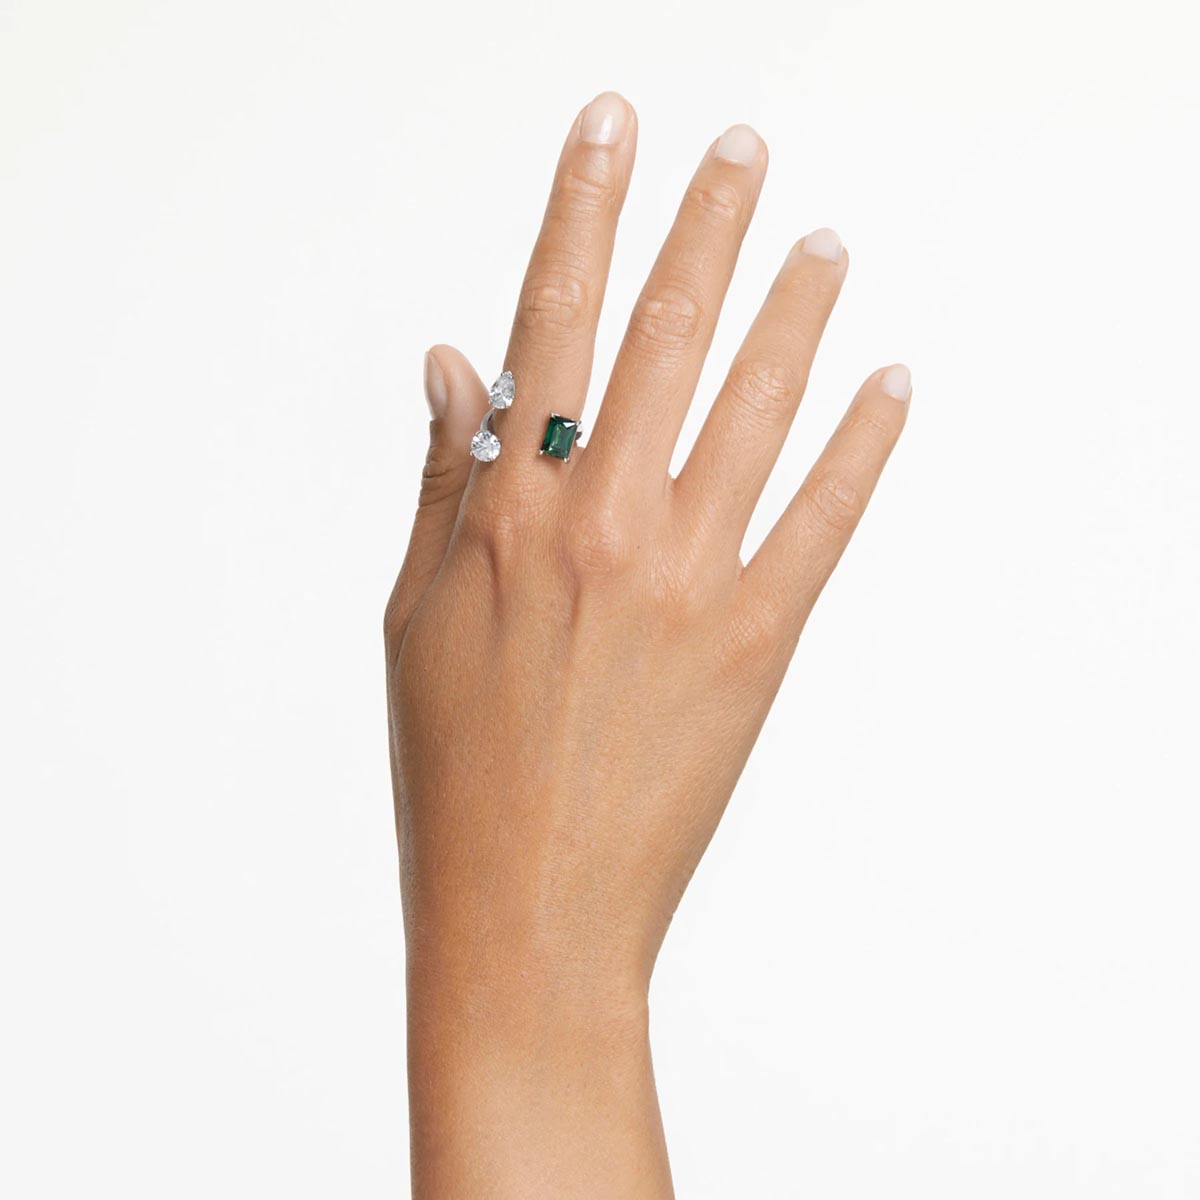 Swarovski Green Mesmera Open Ring (size 8)